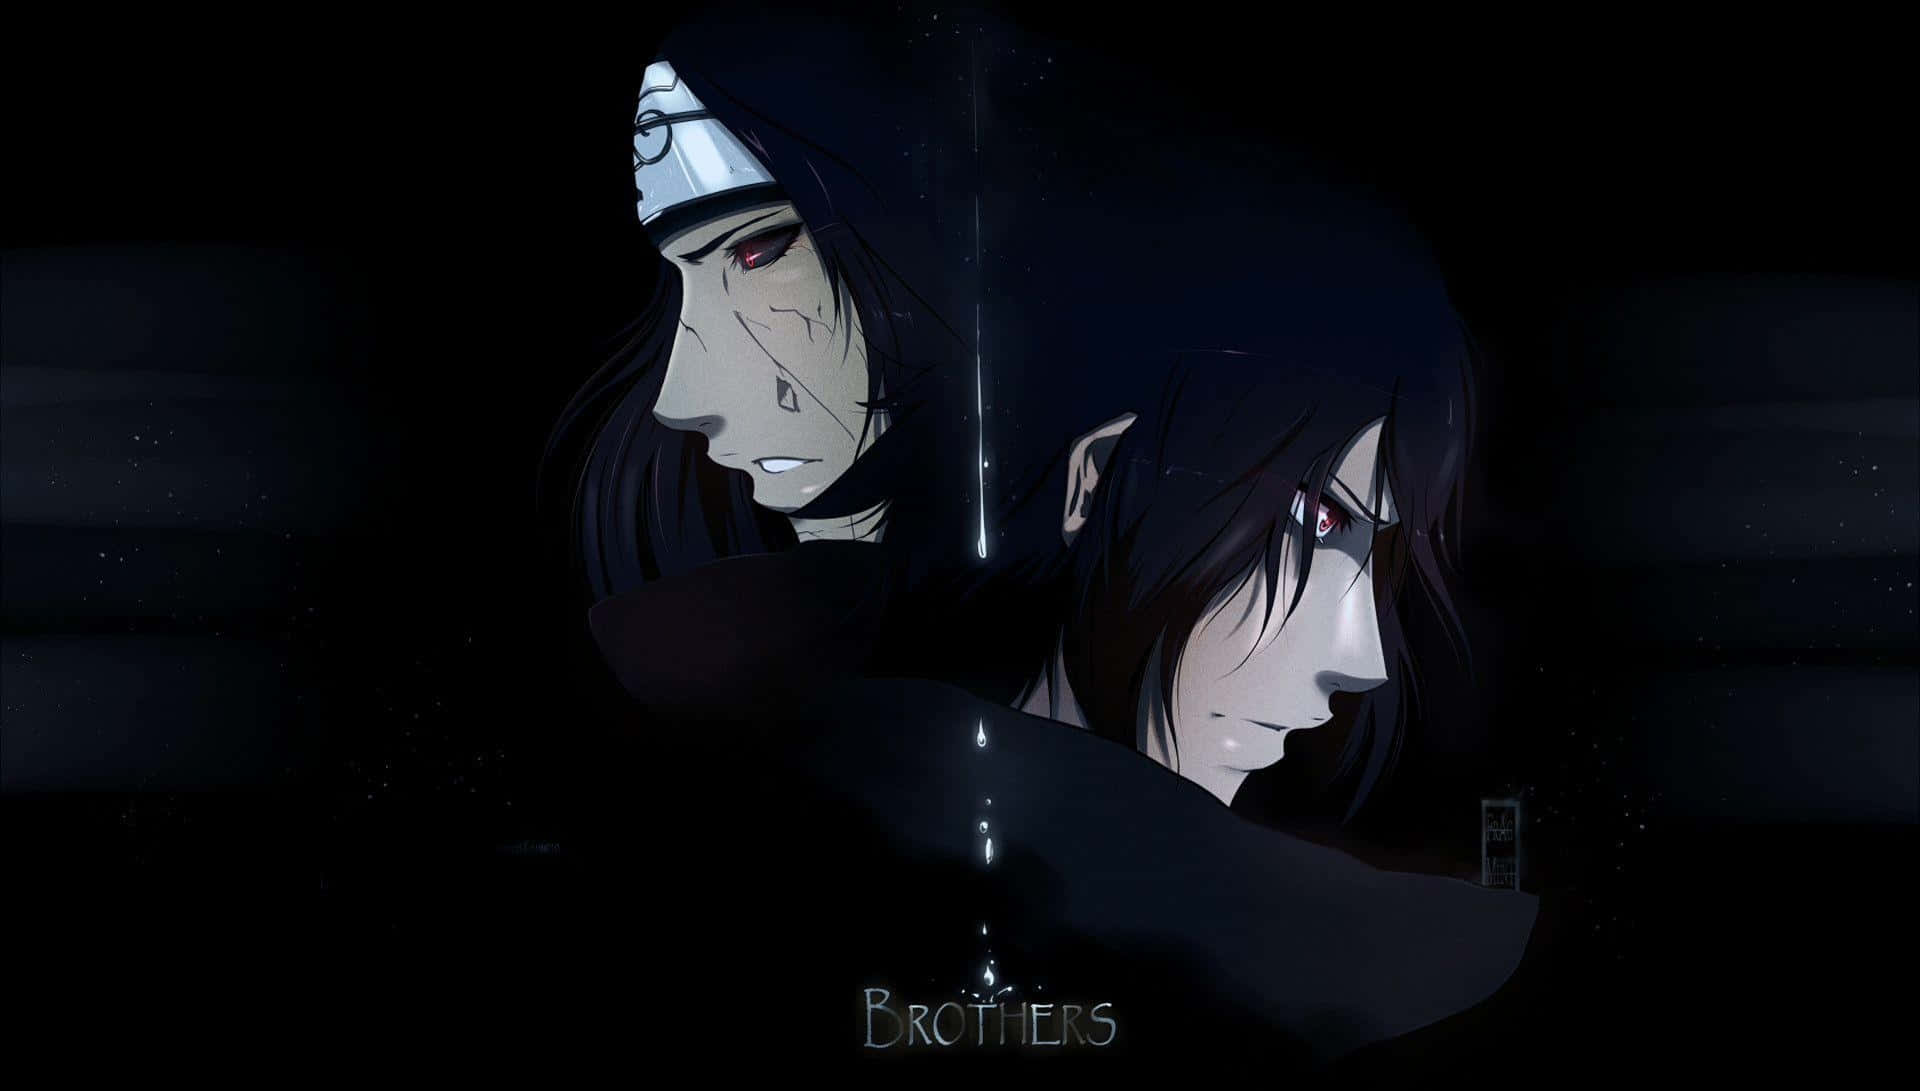 Itachi Aesthetic Posing With Brother Sasuke Uchiha In Black Background Wallpaper